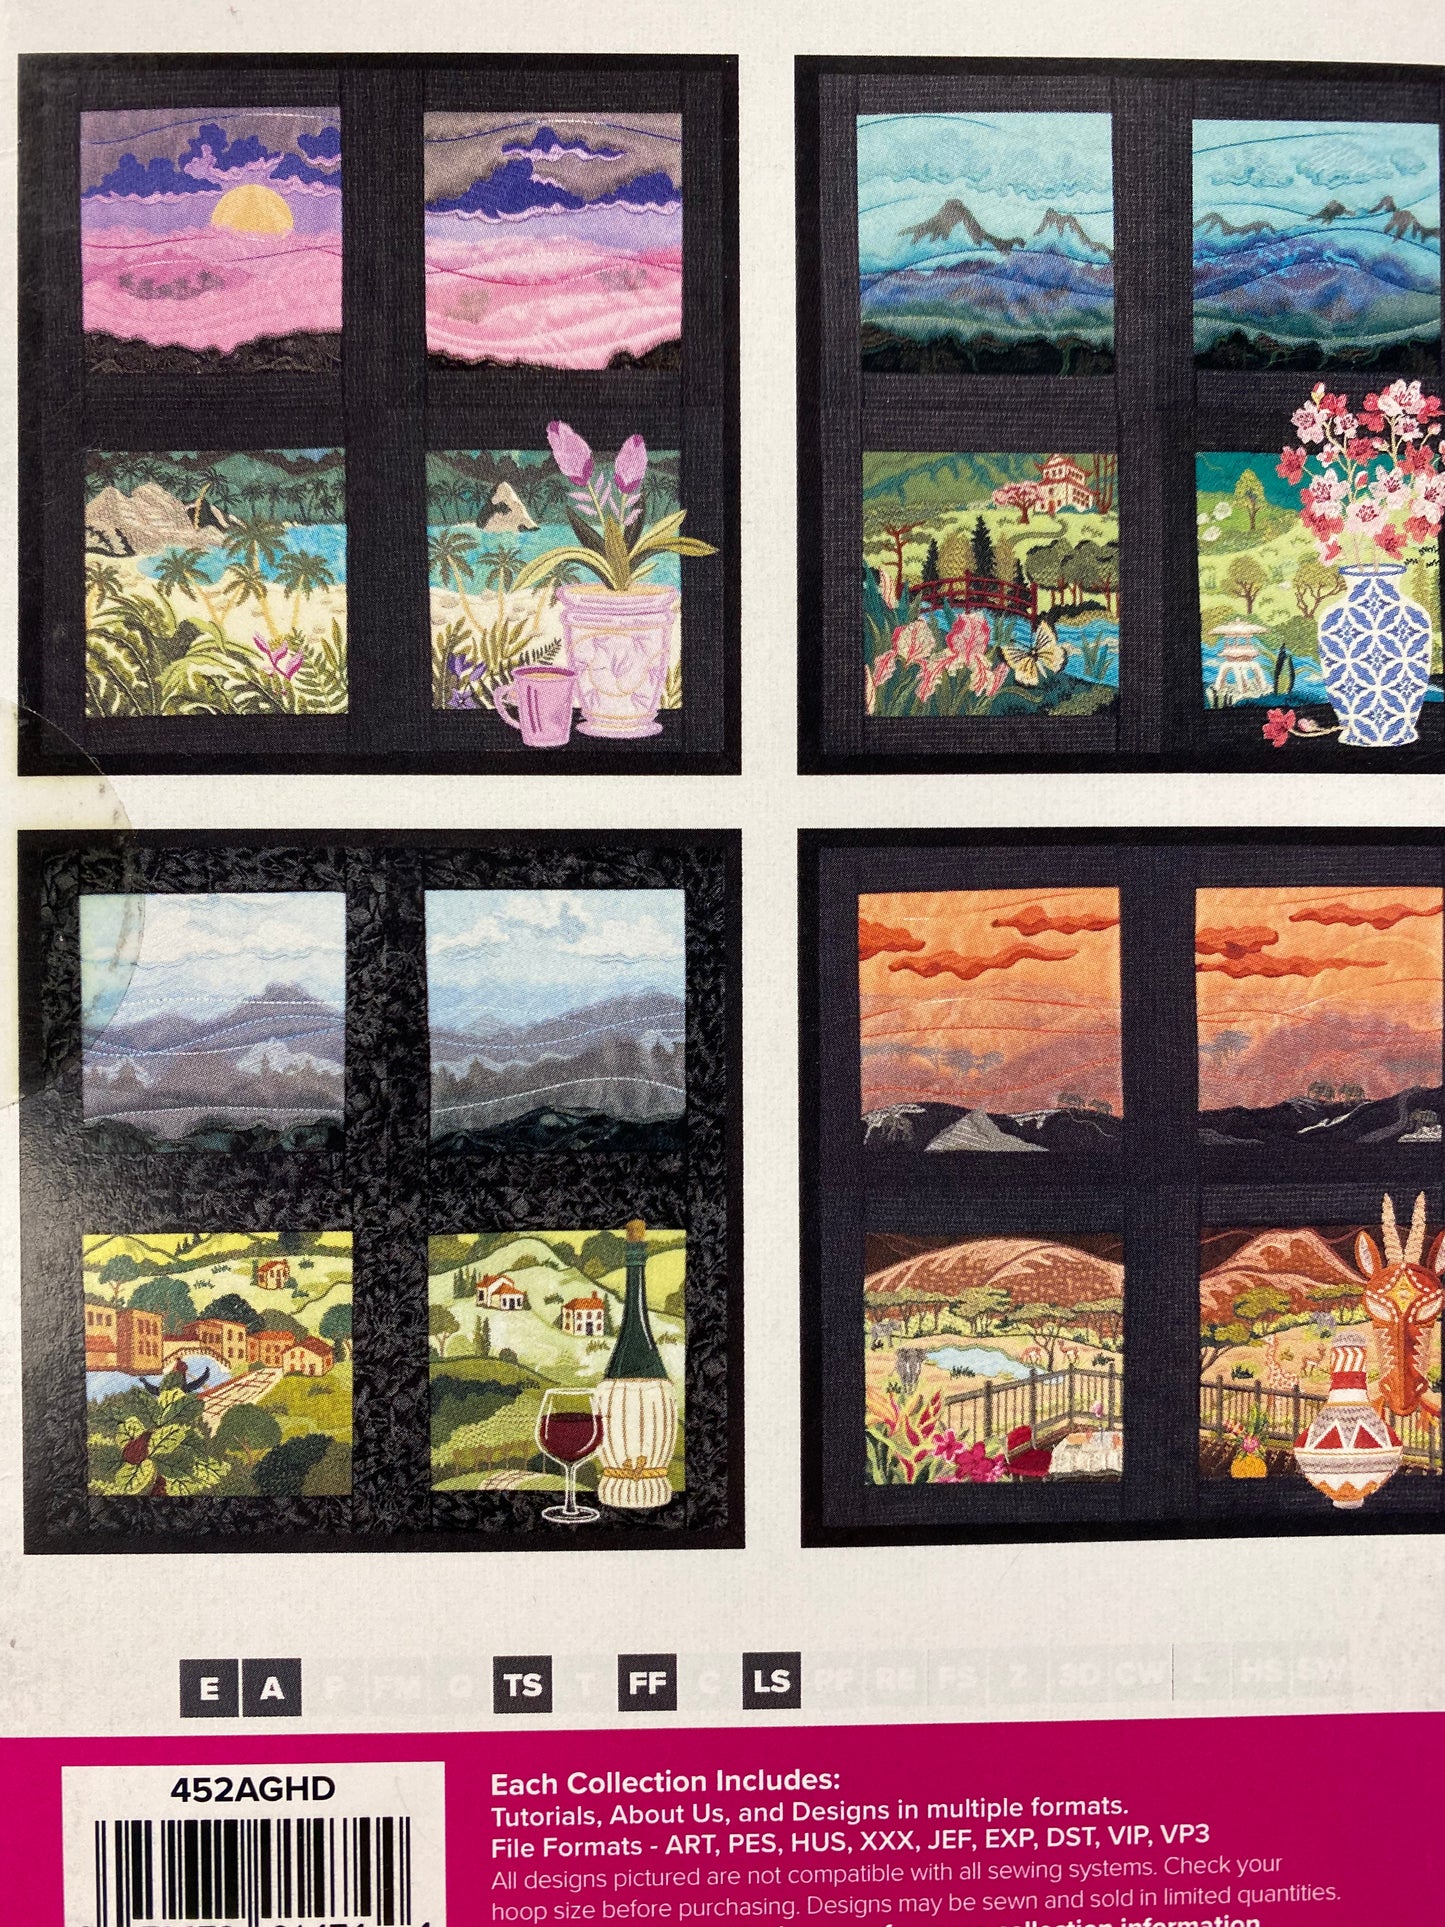 Mini Window Tile Scenes by Anita Goodesign